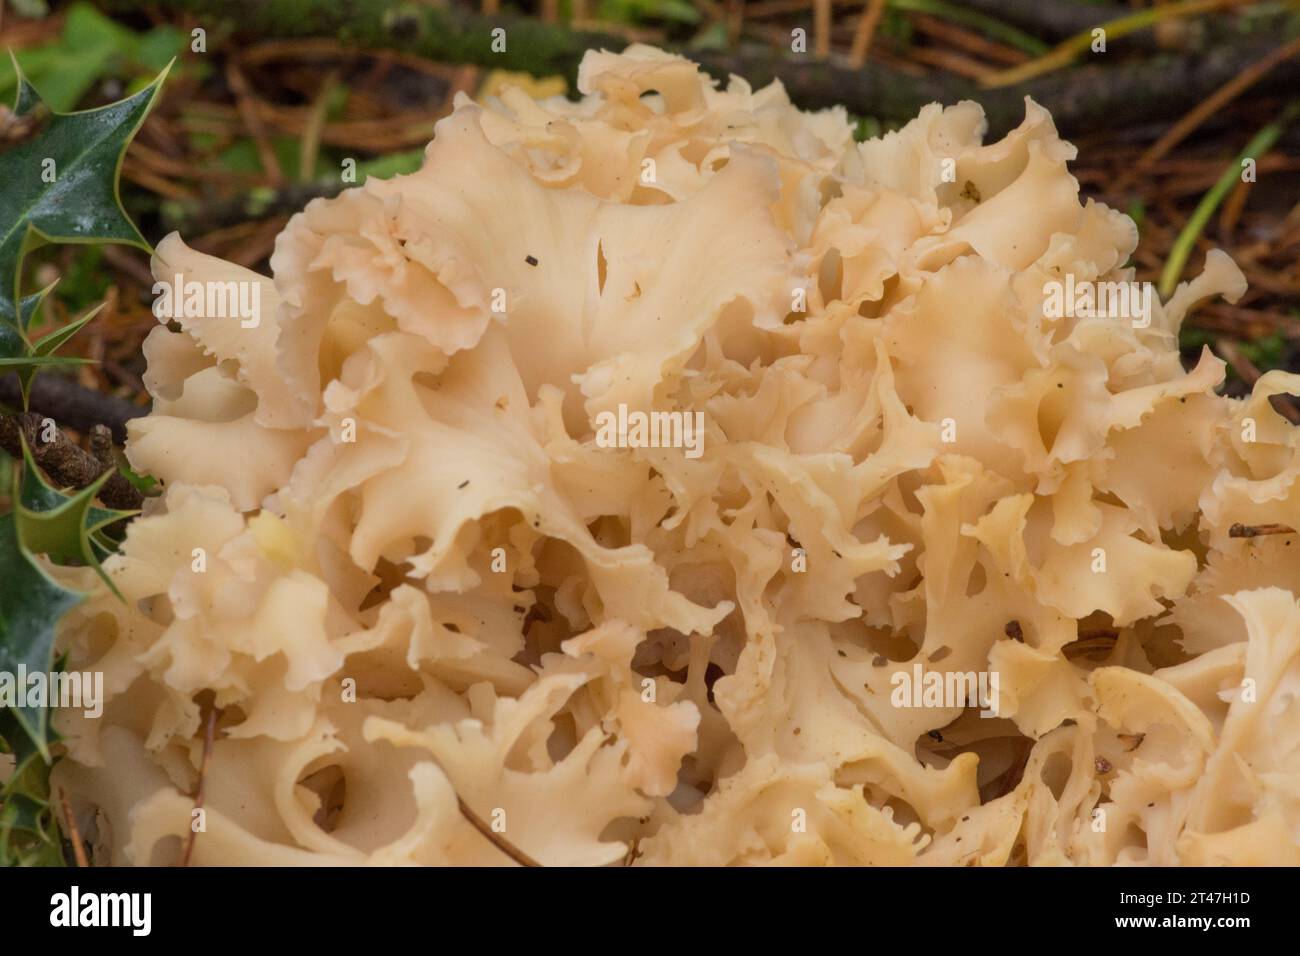 Wood cauliflower, Cauliflower fungus, Sparassis crispa, rosette of edible fungi growing at the base of Scots Pine tree Stock Photo